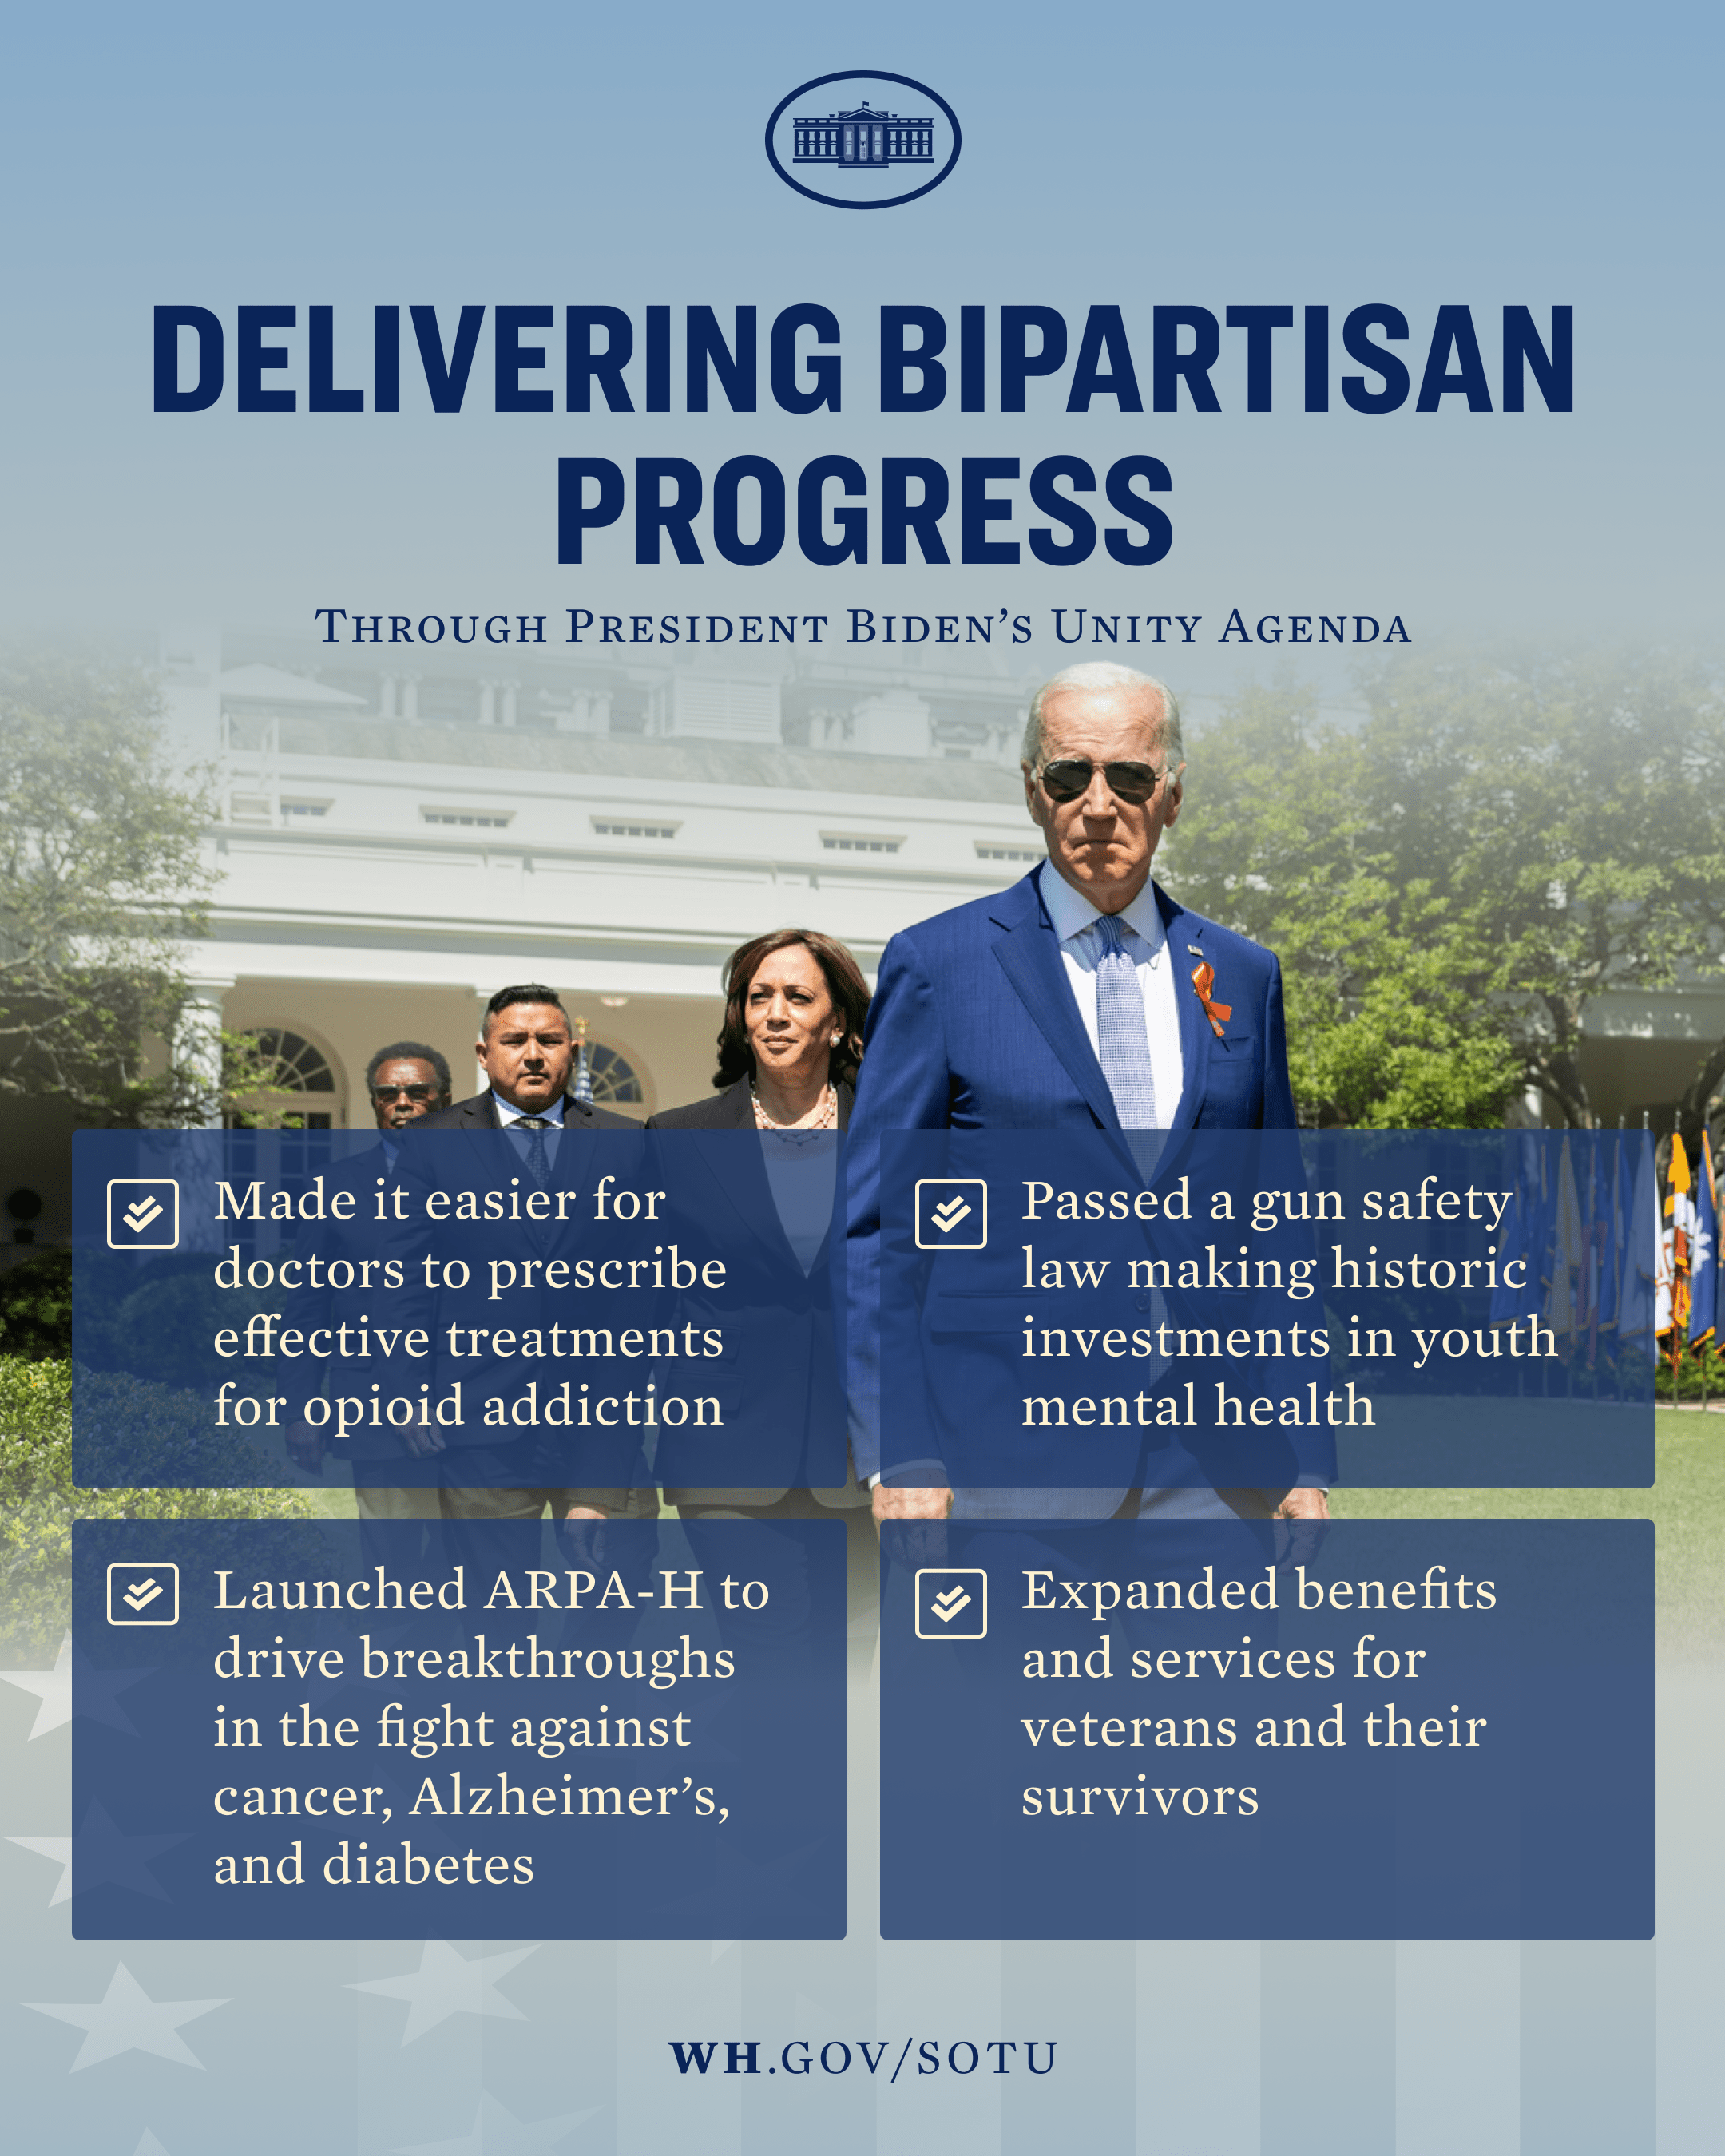 Delivering Bipartisan Progress through President Biden’s Unity Agenda.